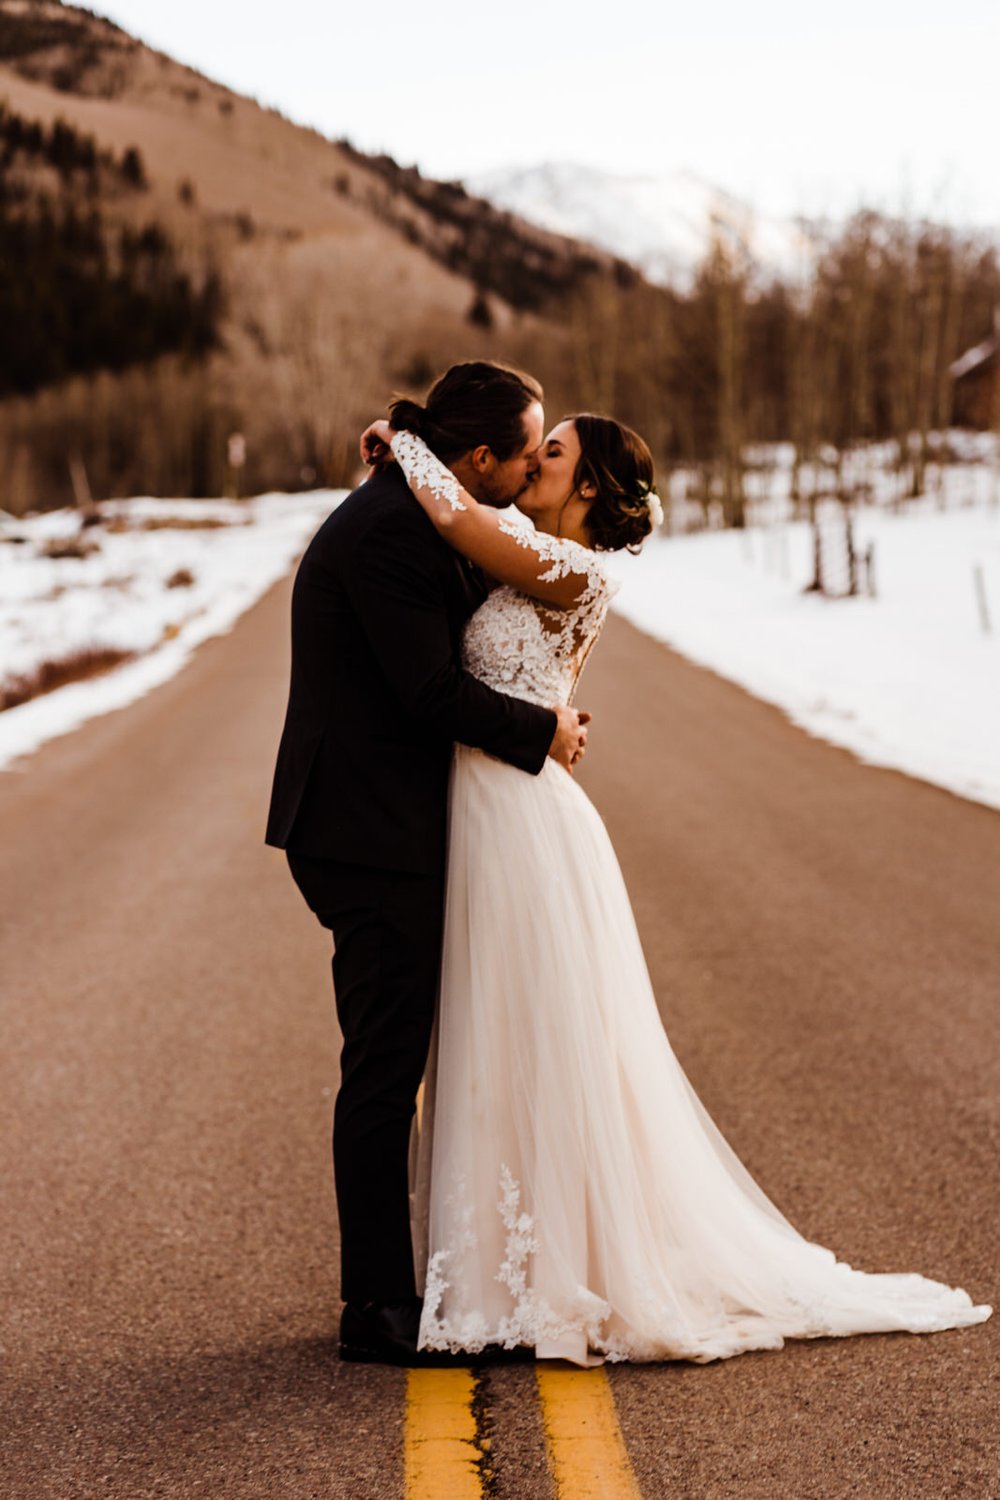 Colorado-Elopement-Romantic-Portraits-of-Newlyweds7.jpg